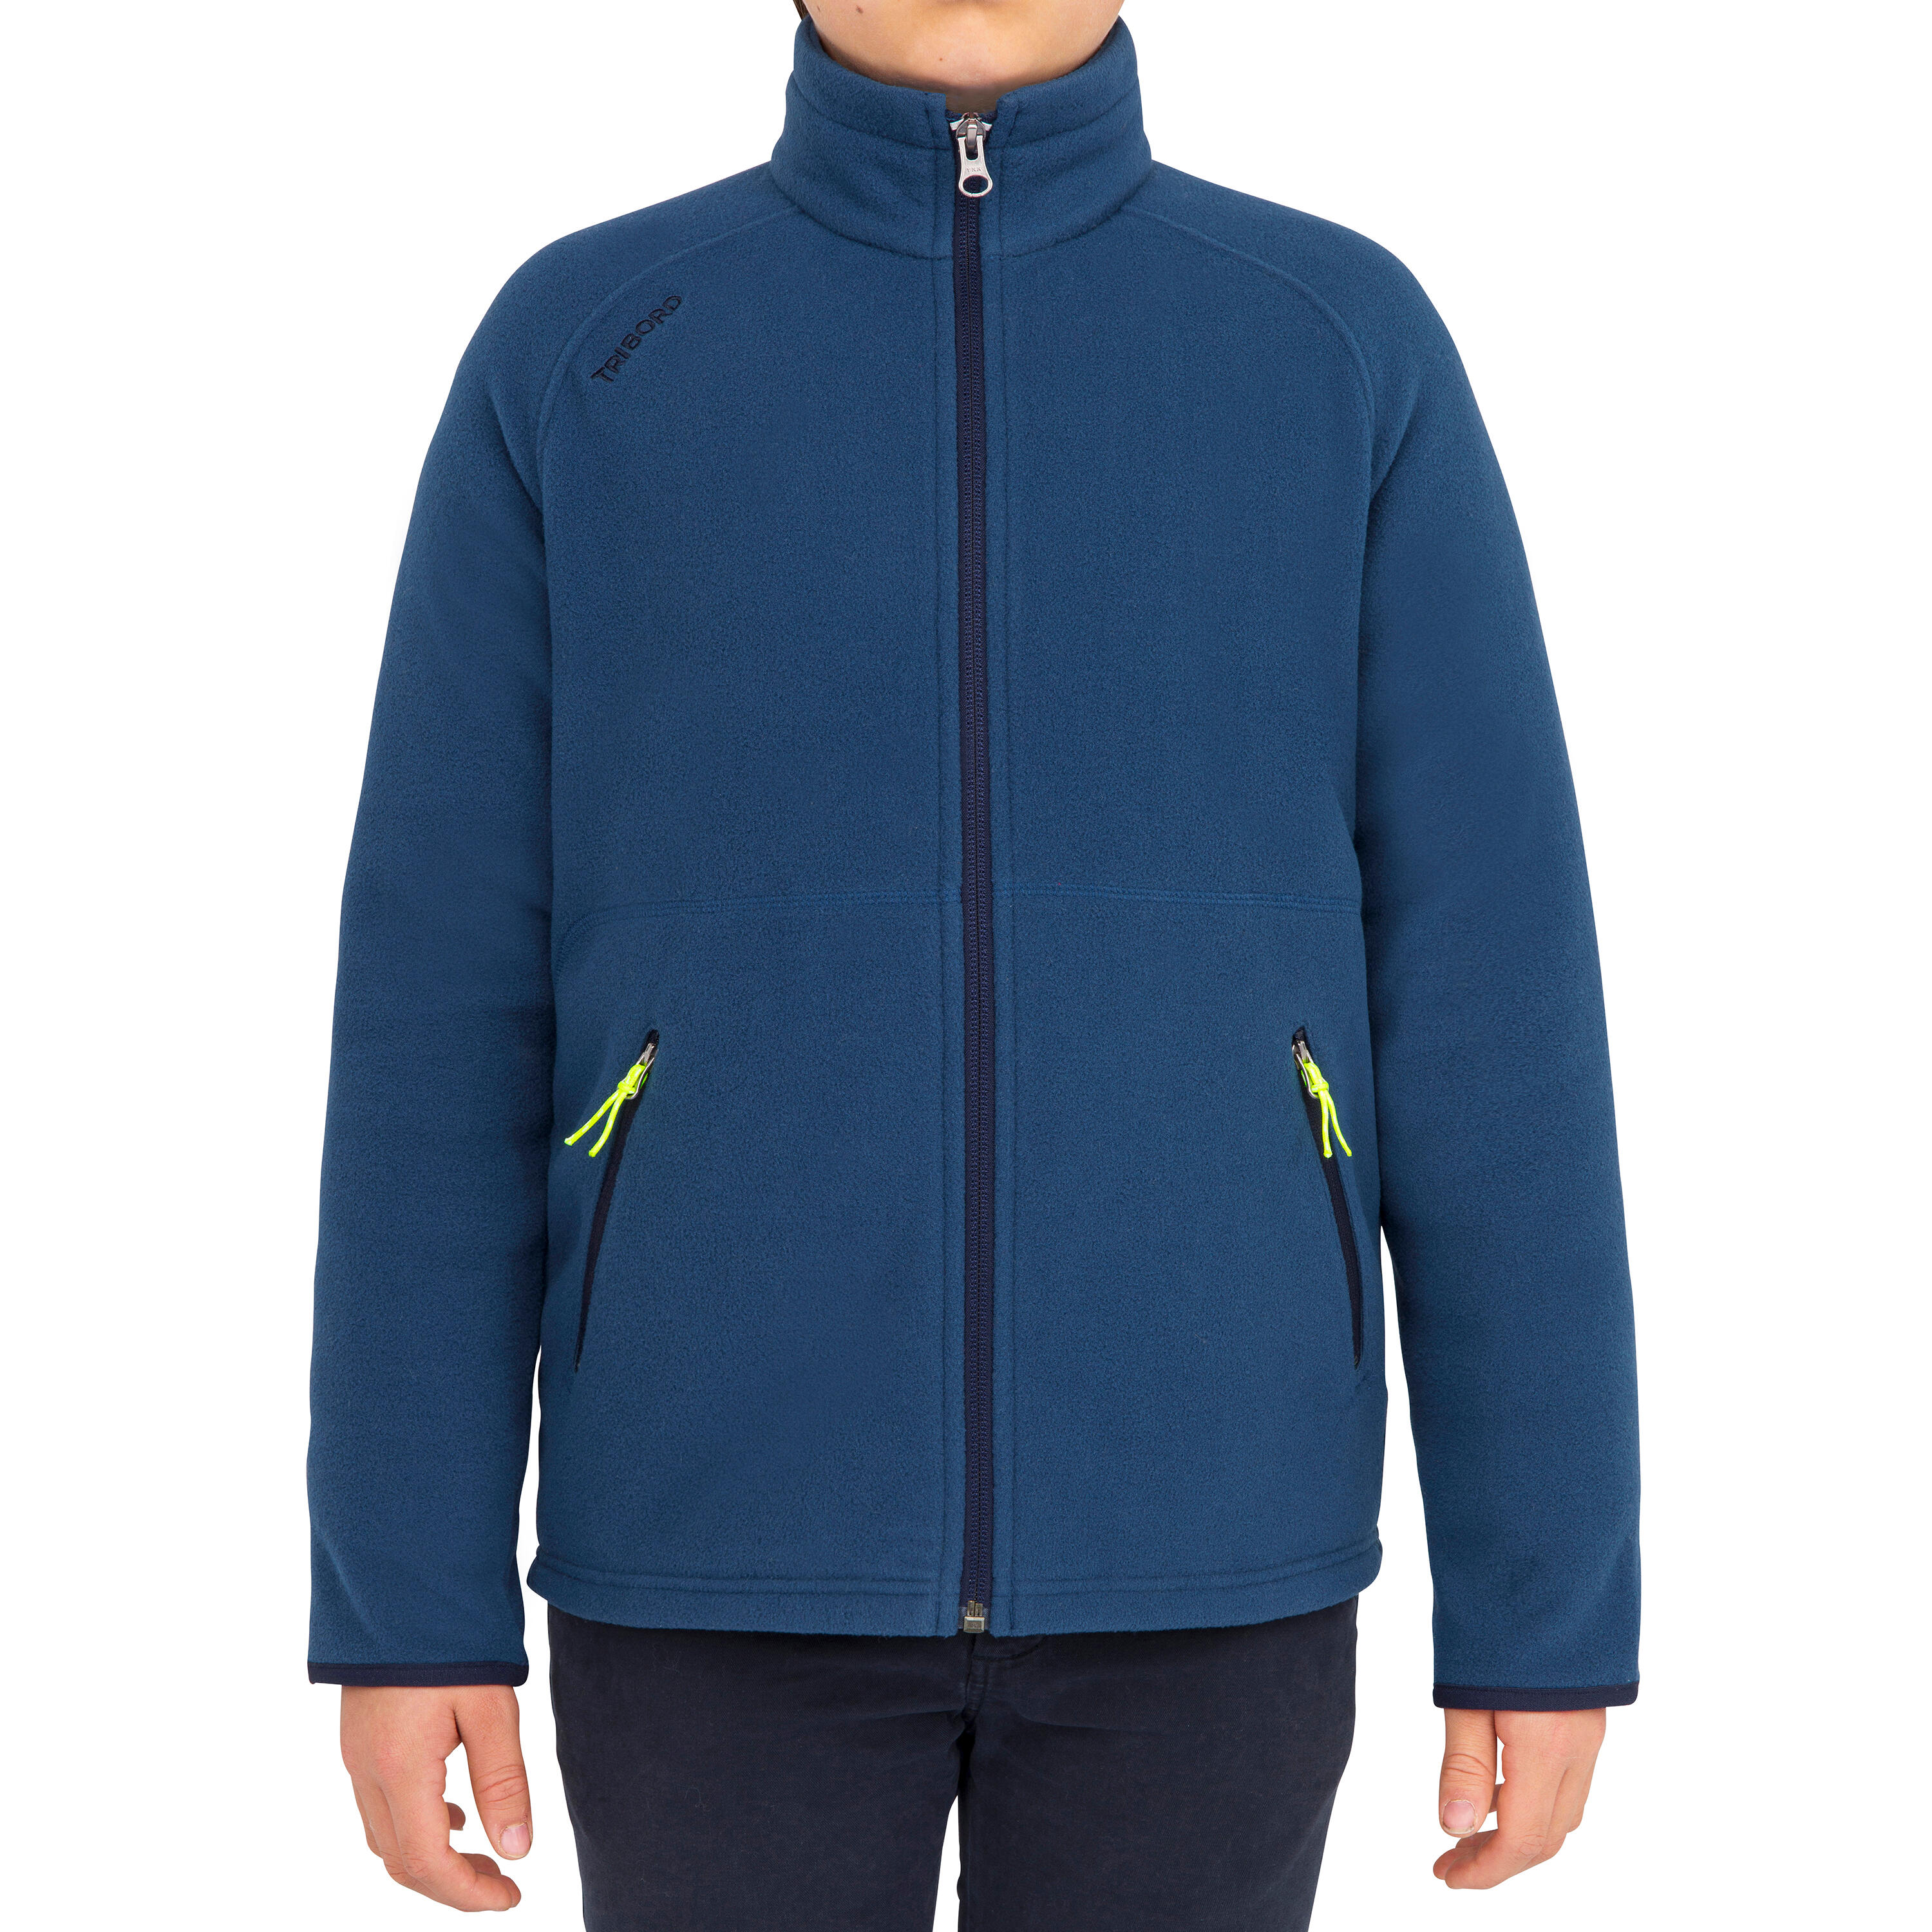 Kids warm fleece sailing jacket 100 - Ocean blue 2/10